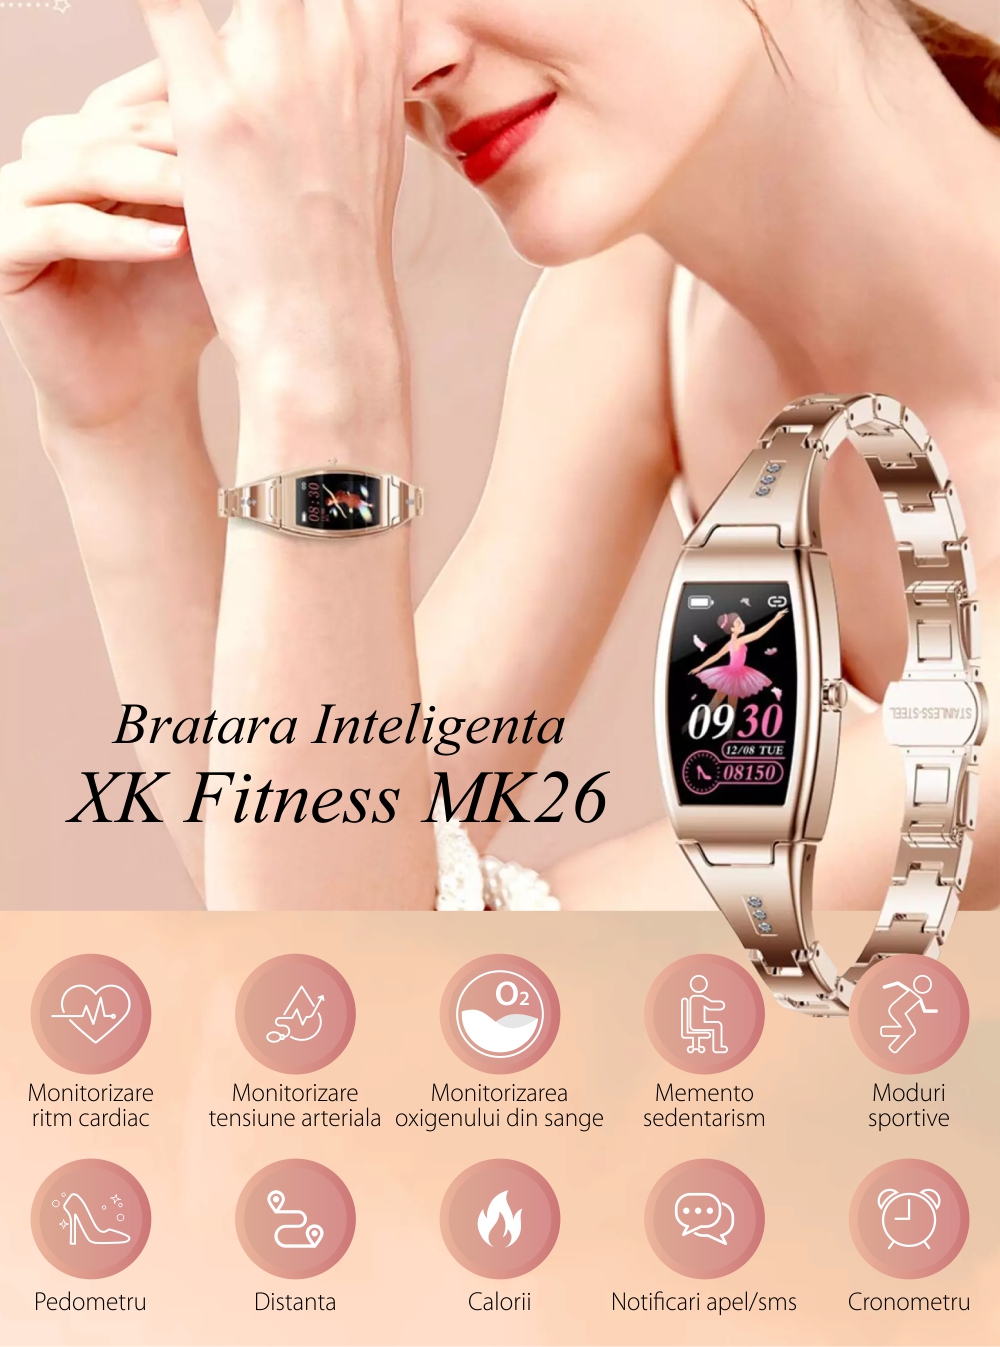 Bratara Fitness Dama XK Fitness MK26 cu Moduri exercitii, Functii sanatate, Antrenament, Argintiu